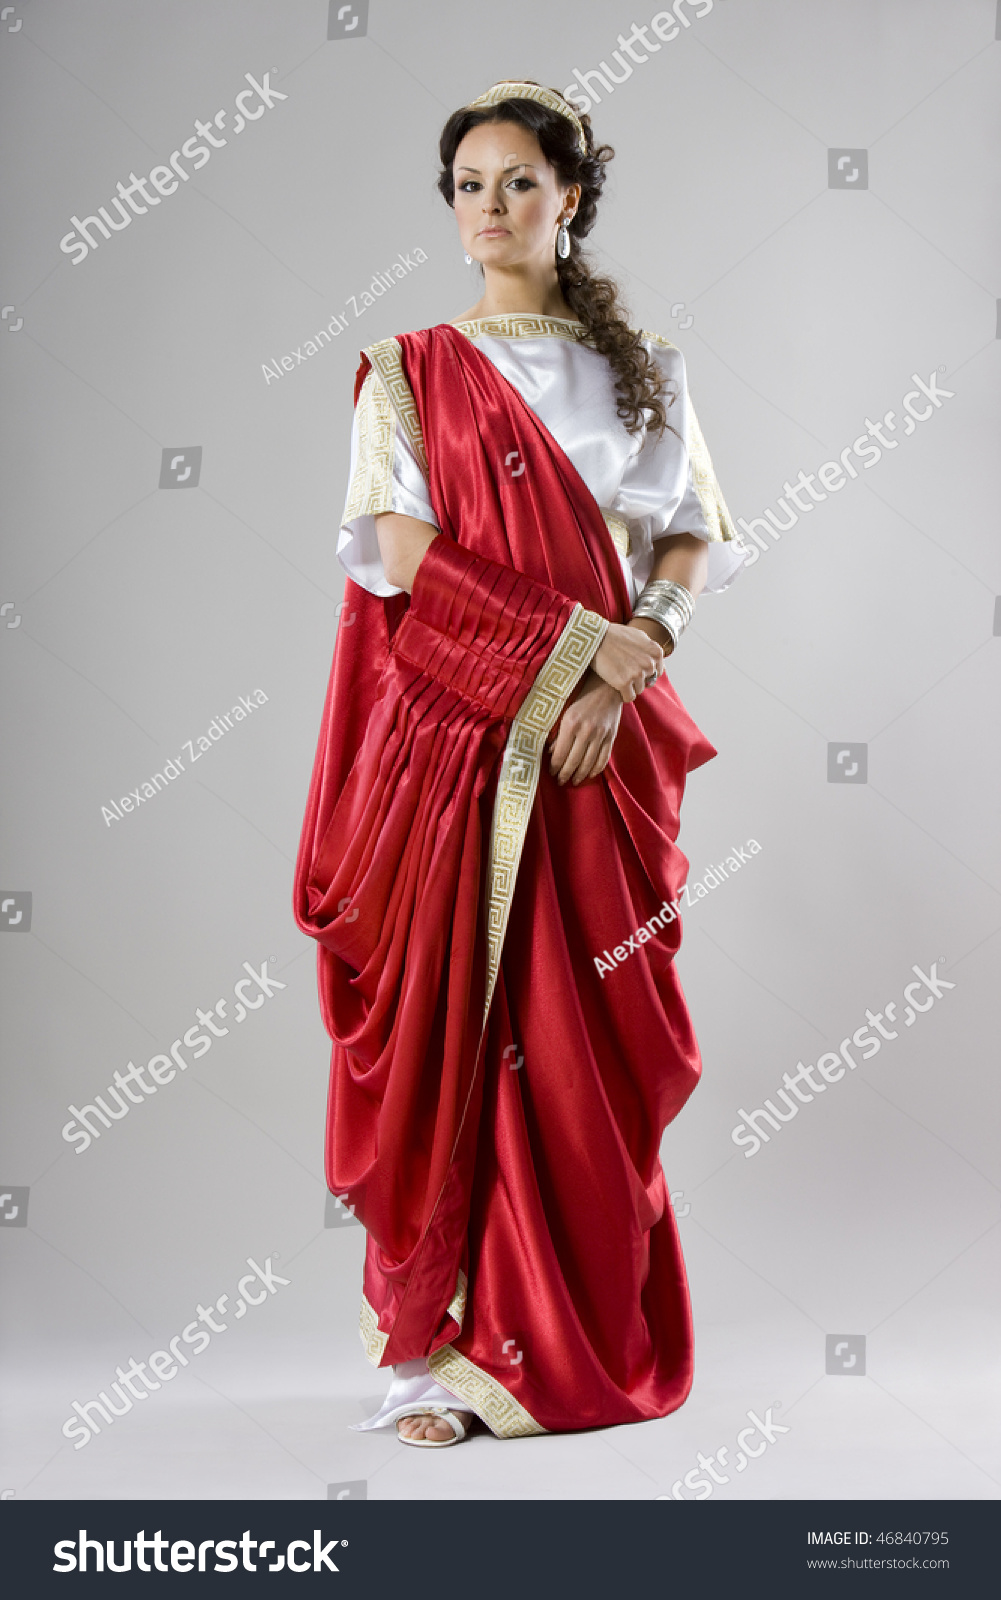 Neo-Classical Women Like Goddess In Roman Clothing. Stock Photo ...